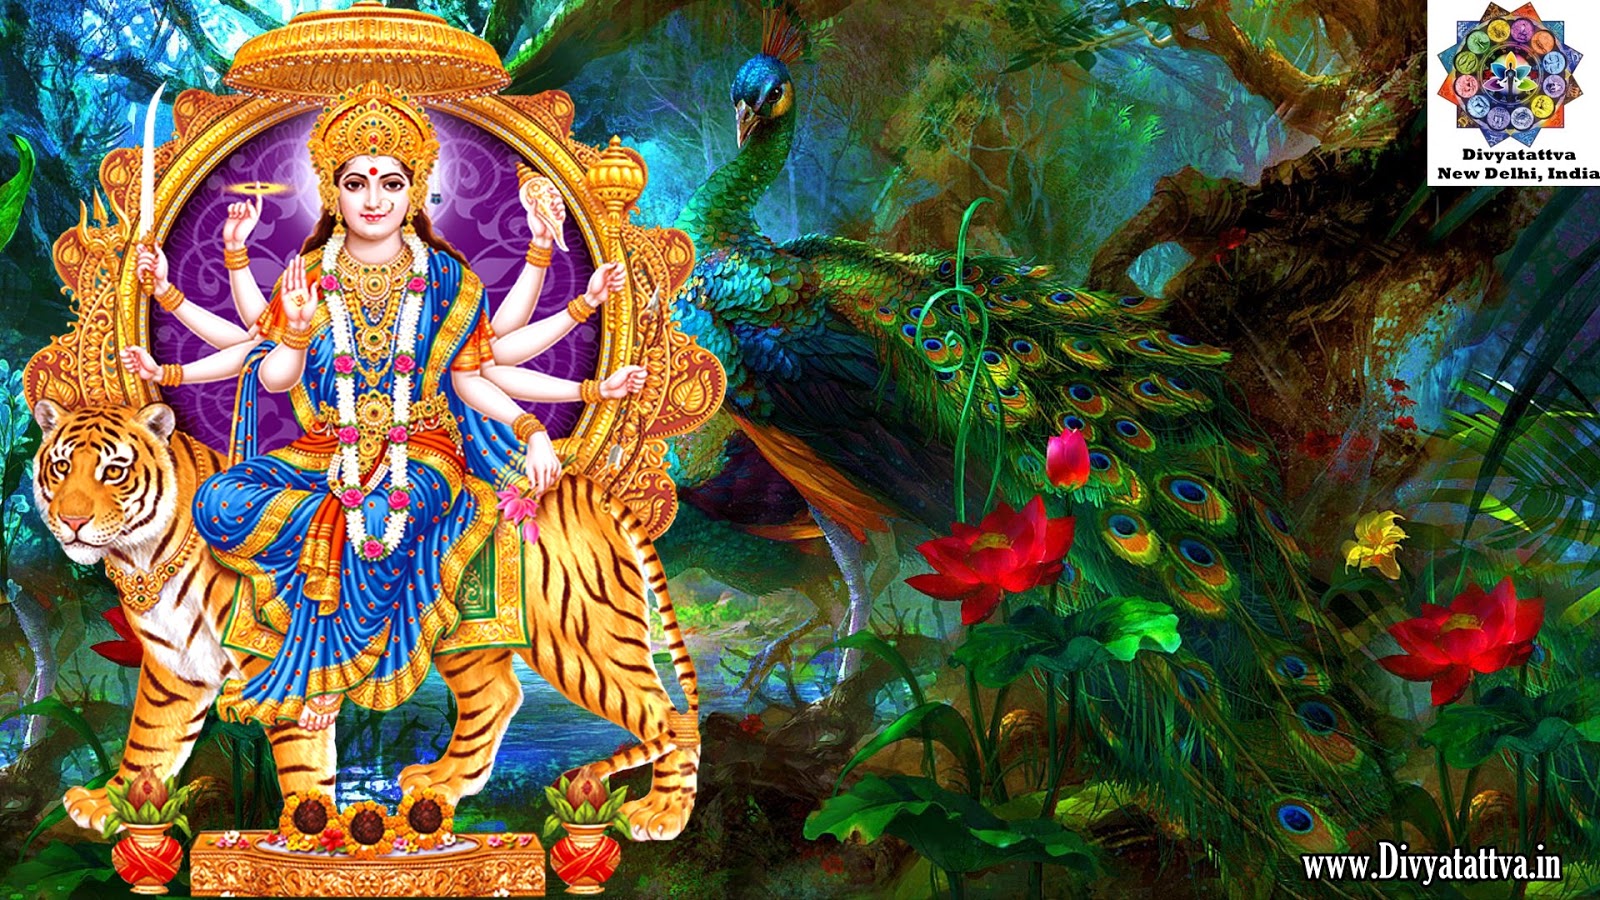 Navratri Wallpapers HD Ma Durga Goddess Images Download Free HD Wallpapers